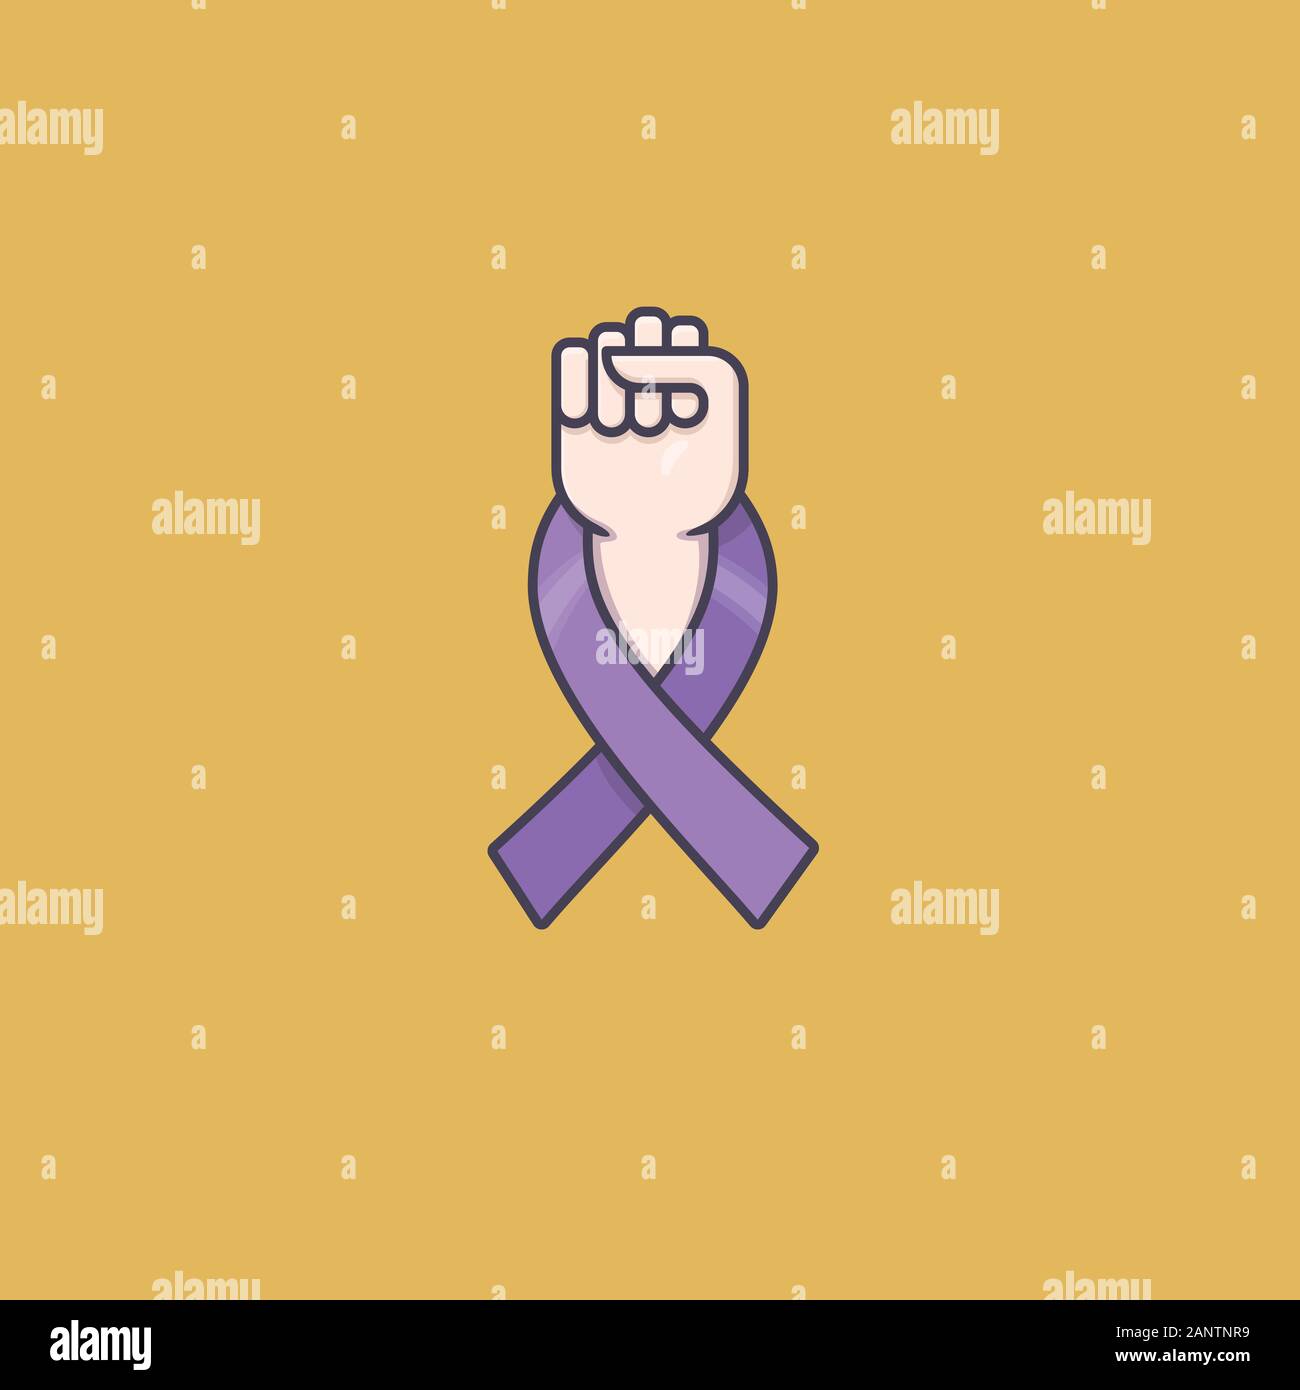 Faust mit Lavendel ribbon Color Vector Illustration für Welt #CancerDay am 4. Februar. Gesundheit Bewusstsein Symbol. Stock Vektor